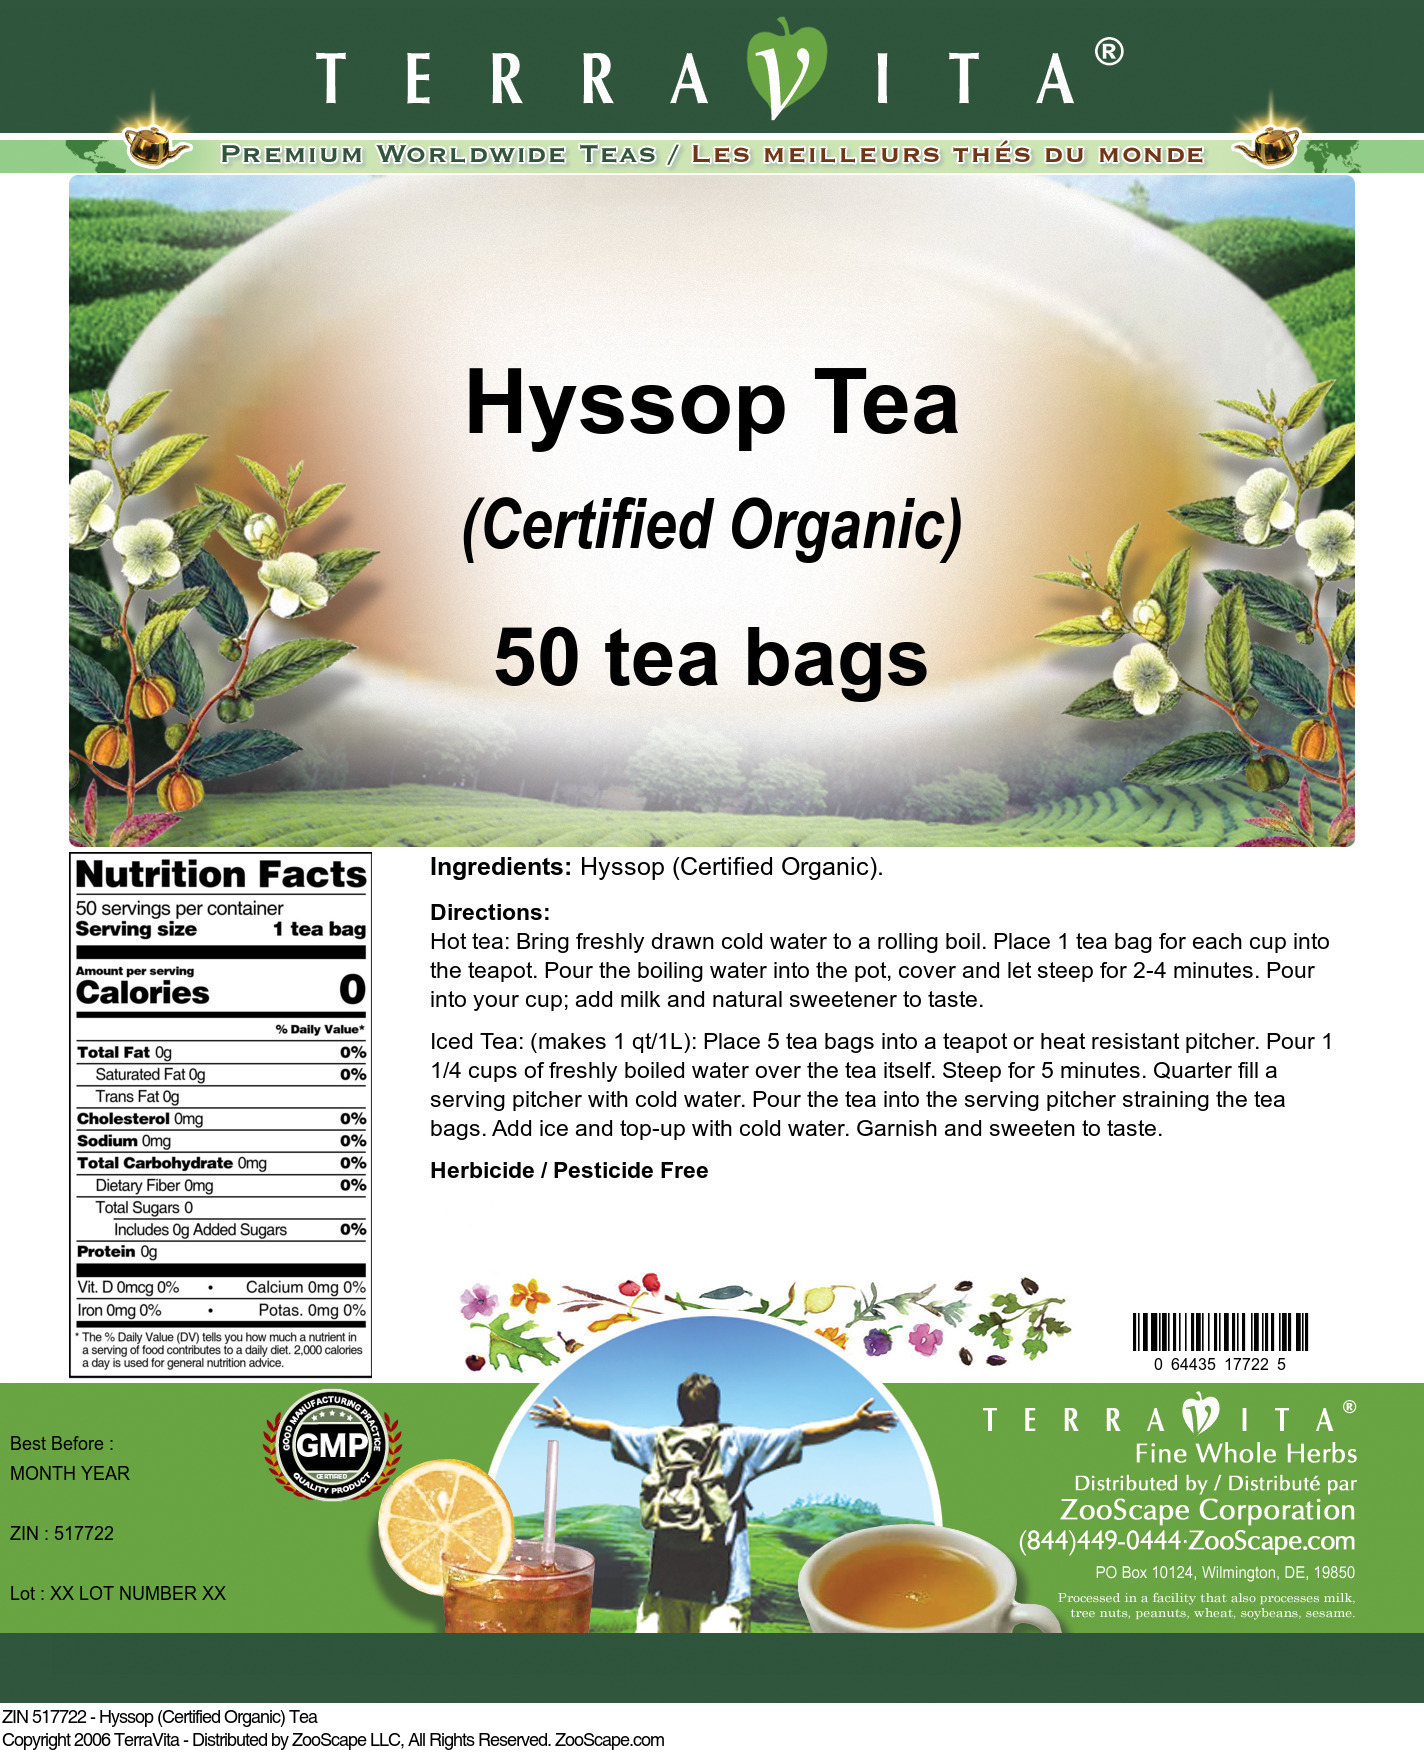 Hyssop (Certified Organic) Tea - Label